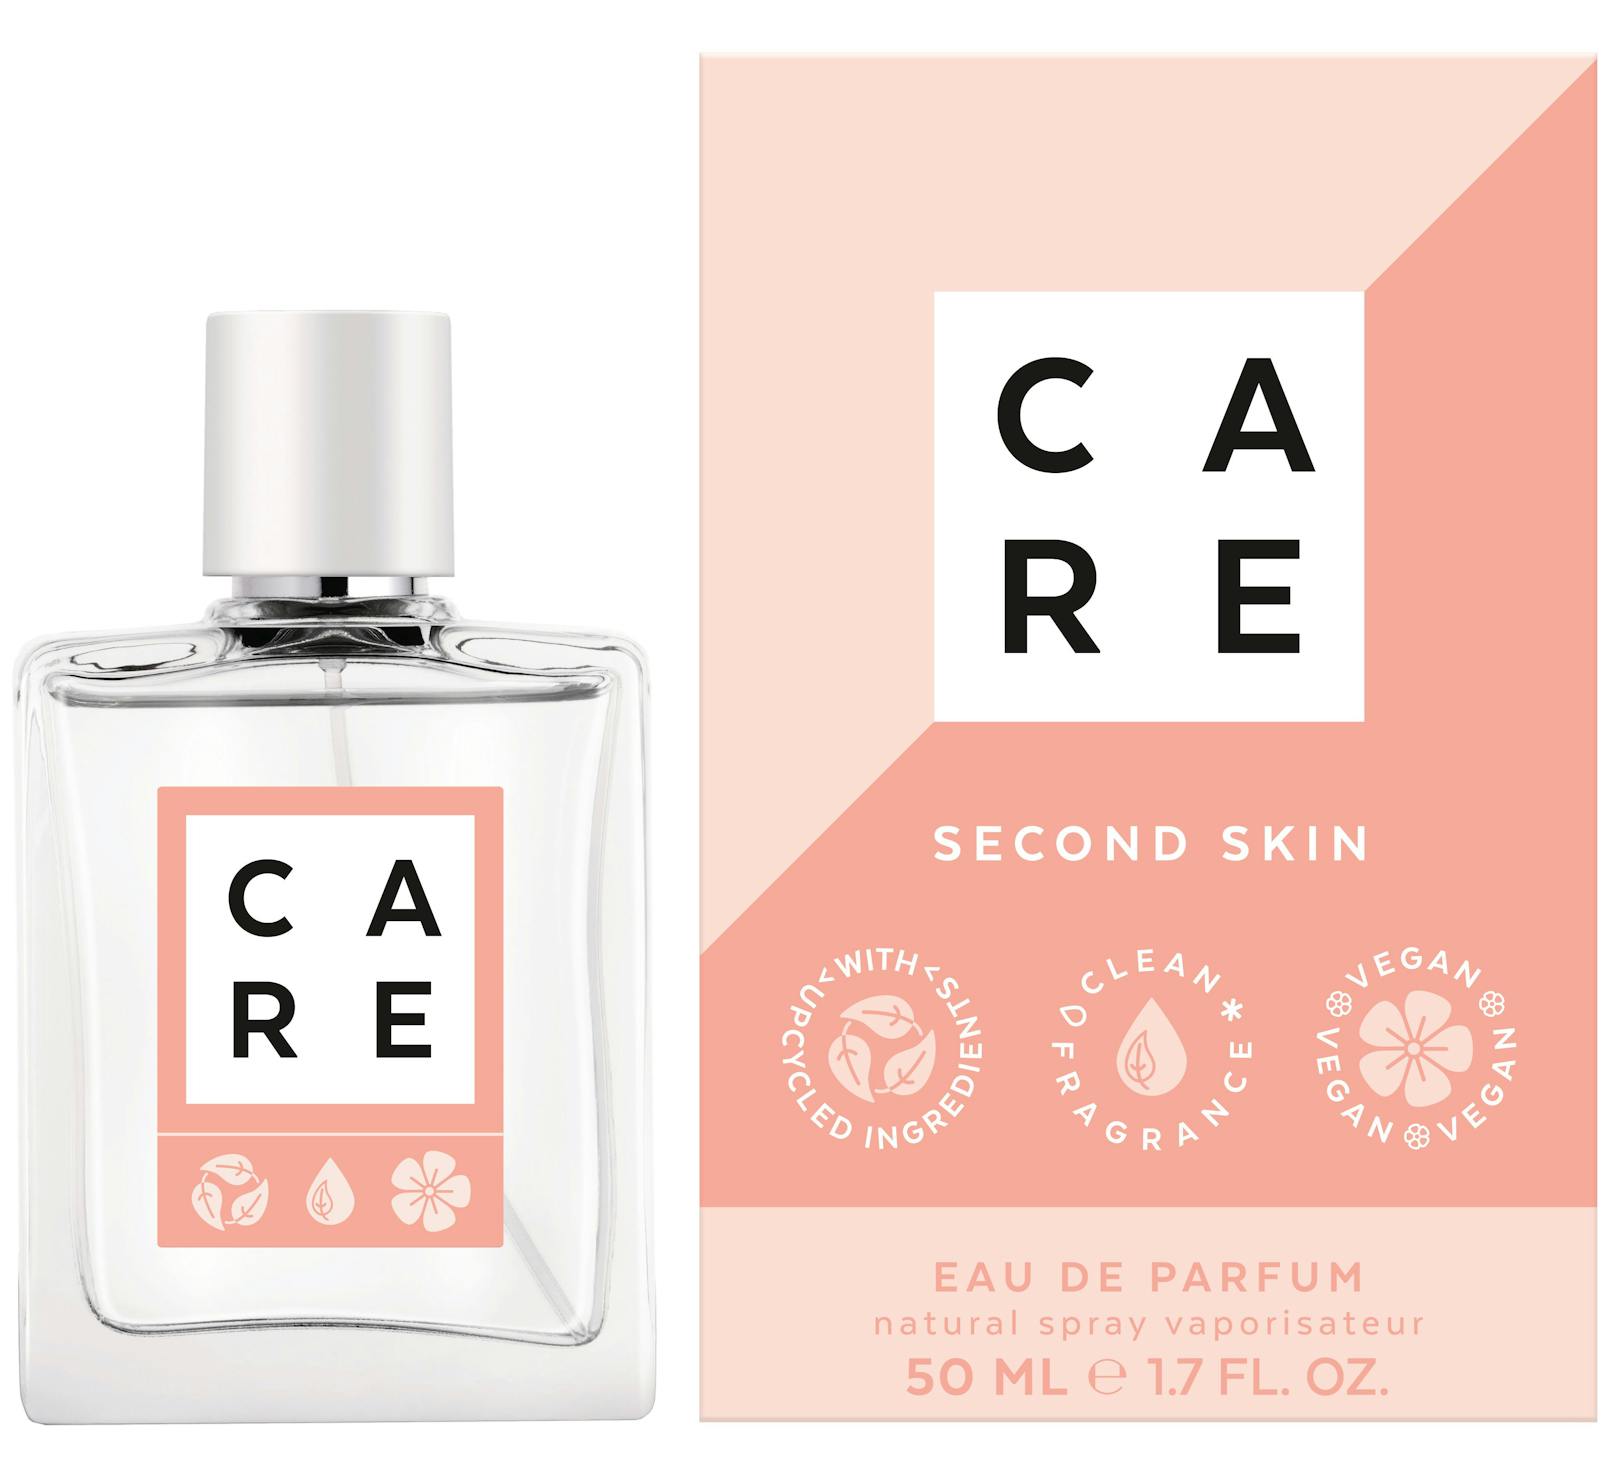 Flakon-Box "Second Skin" von CARE Fragrances